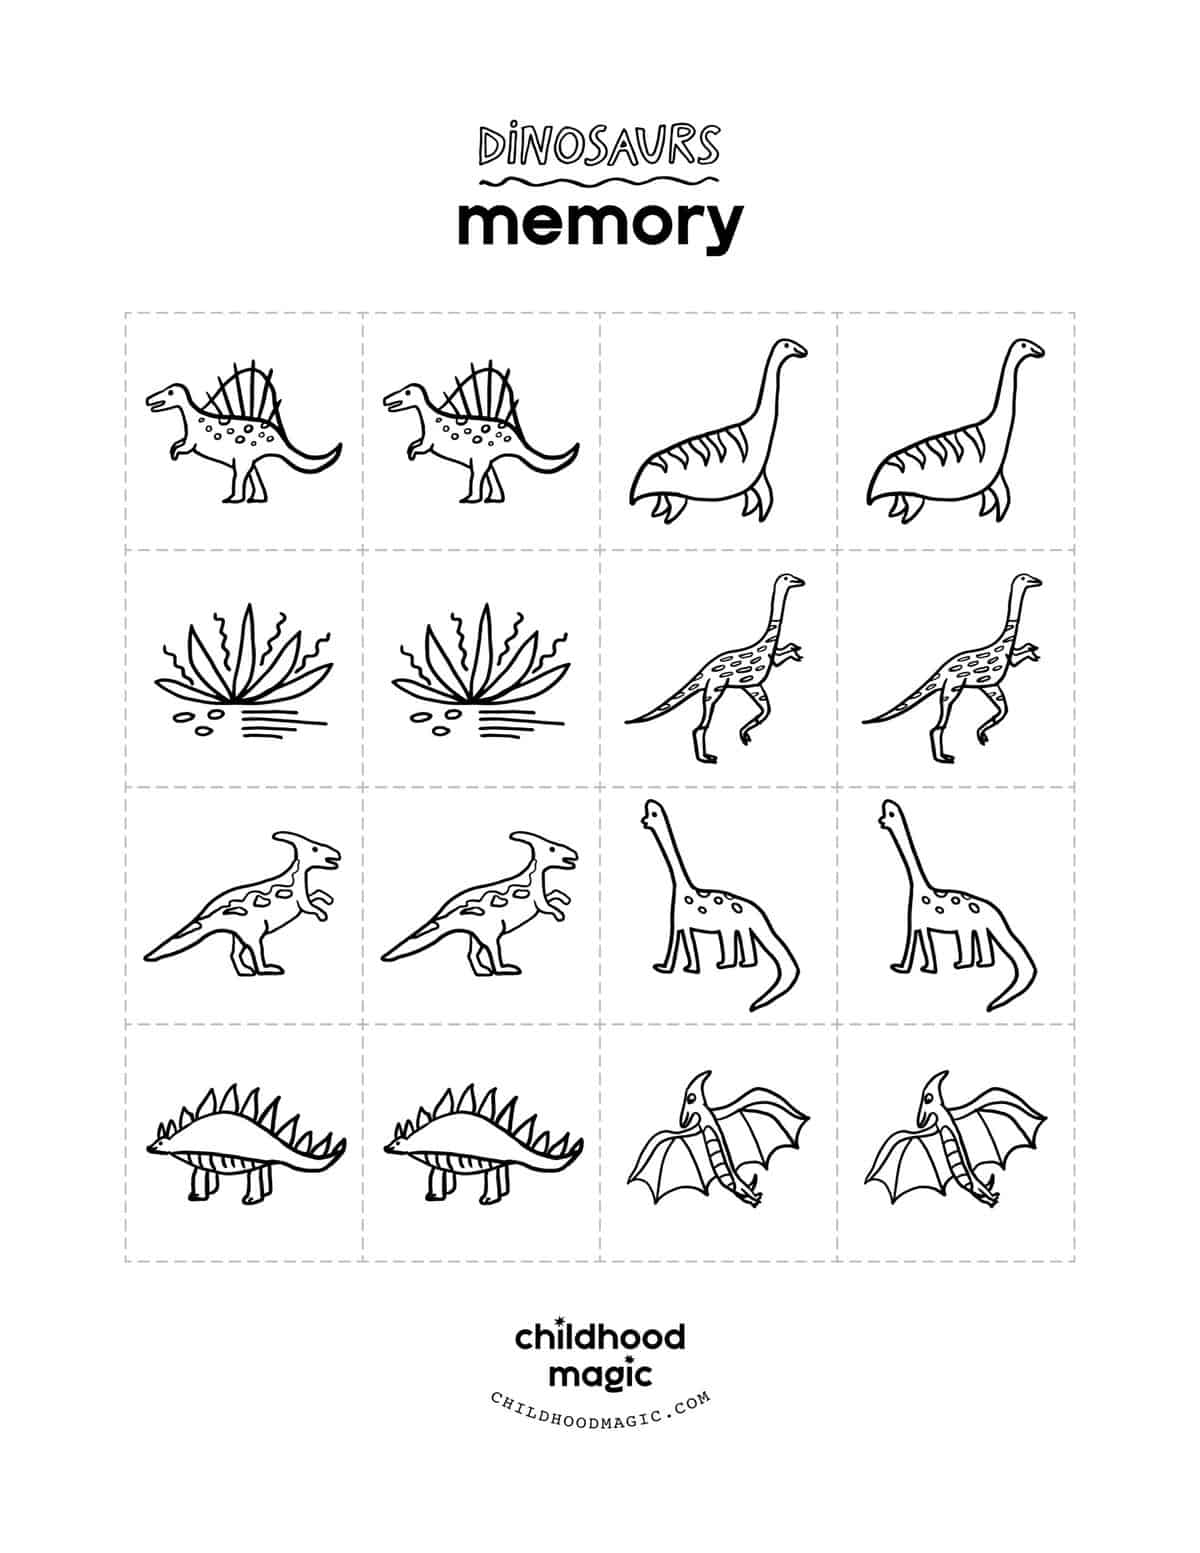 Dinosaur memory game